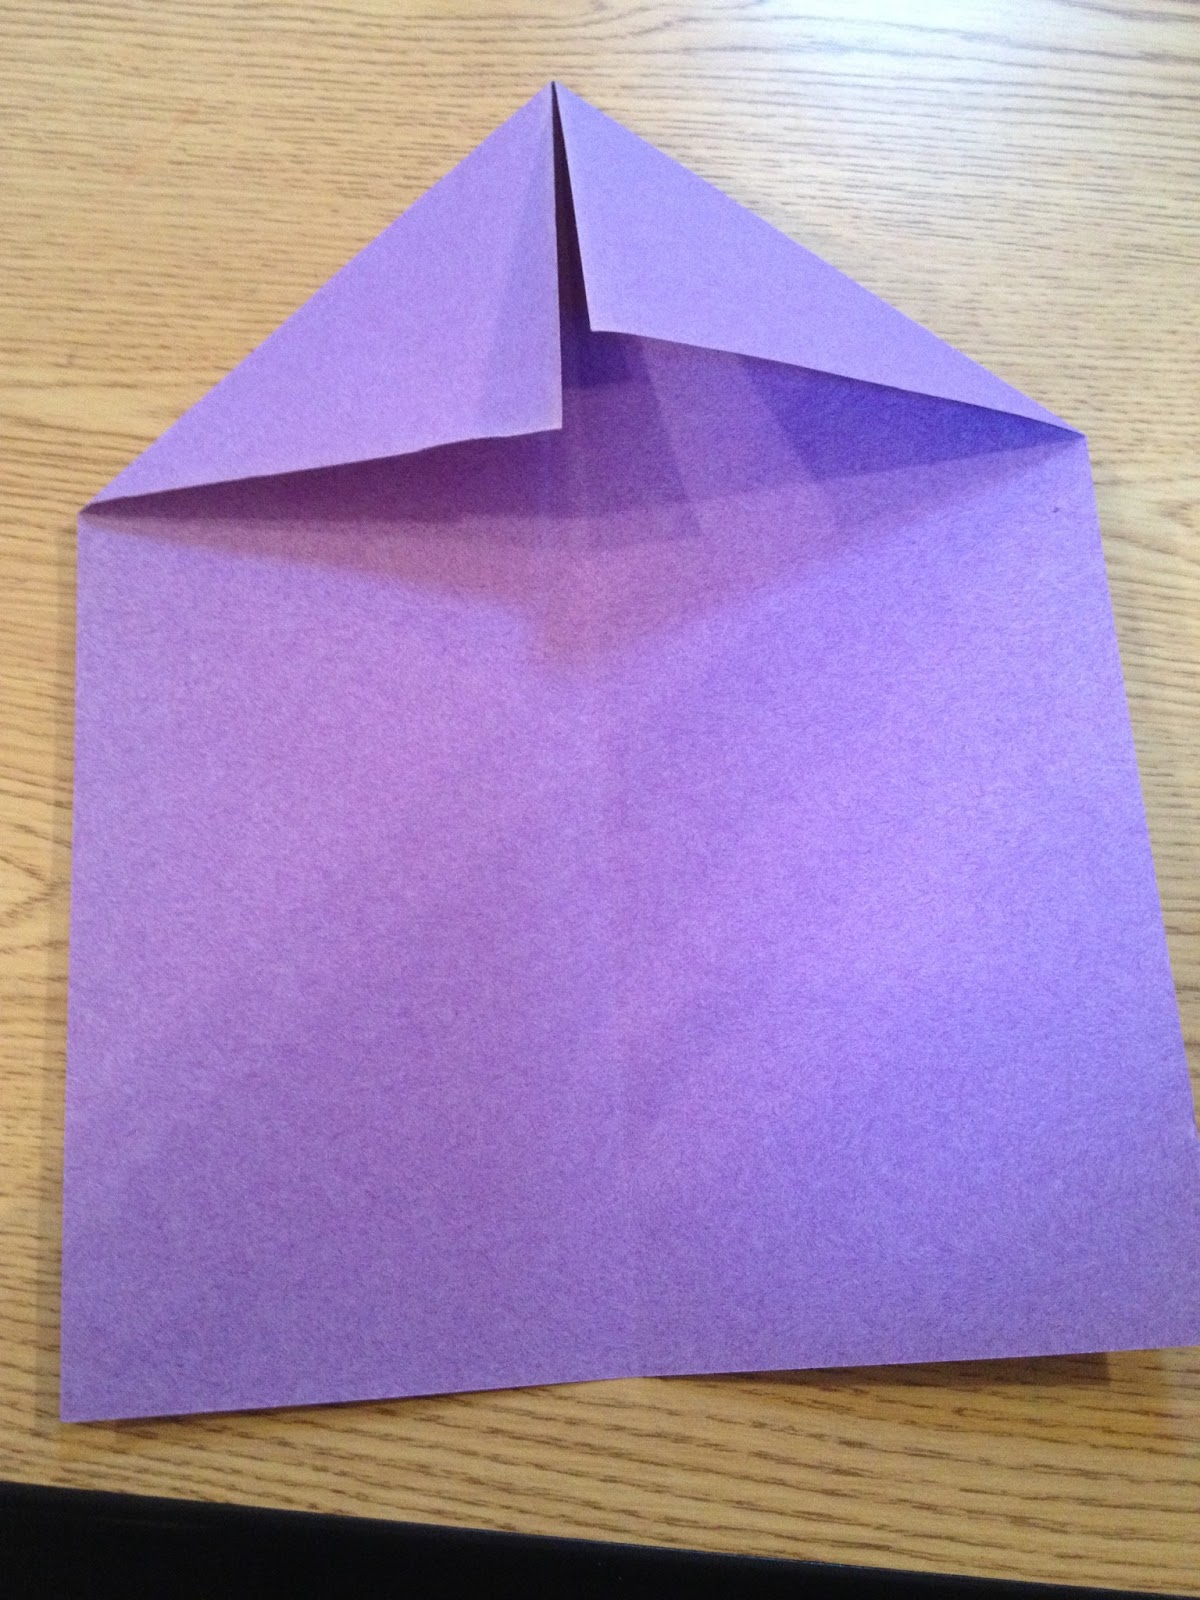 Evergreen Montessori House: Simple Origami Envelope